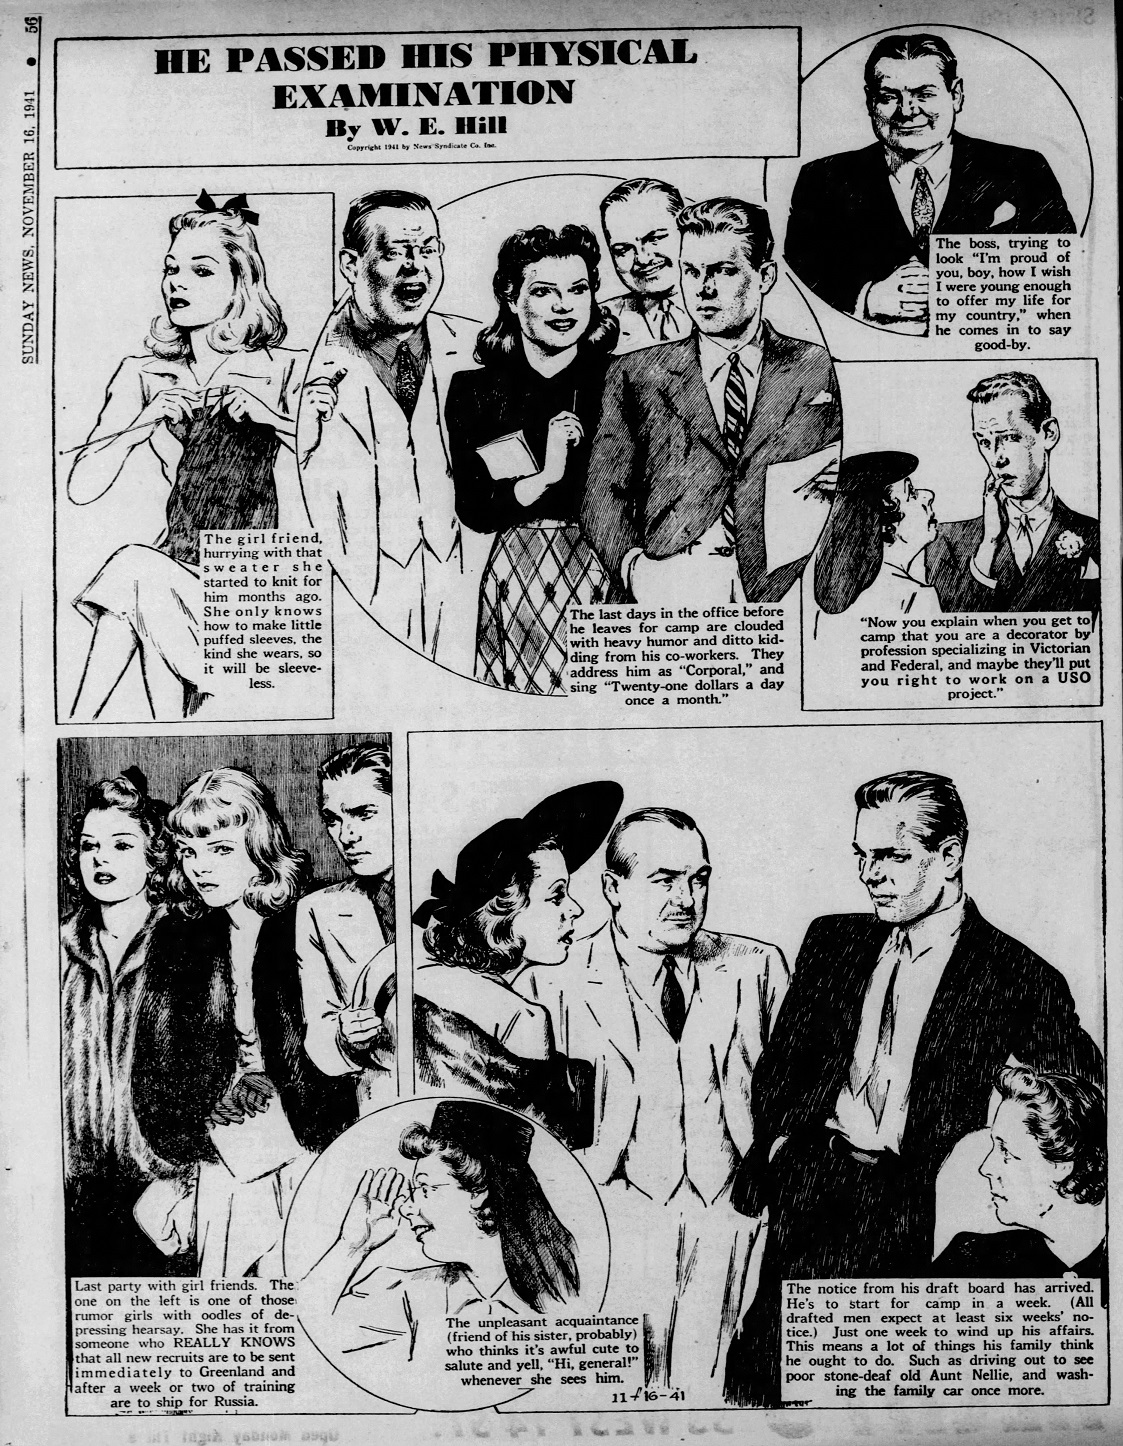 Daily_News_Sun__Nov_16__1941_(1).jpg